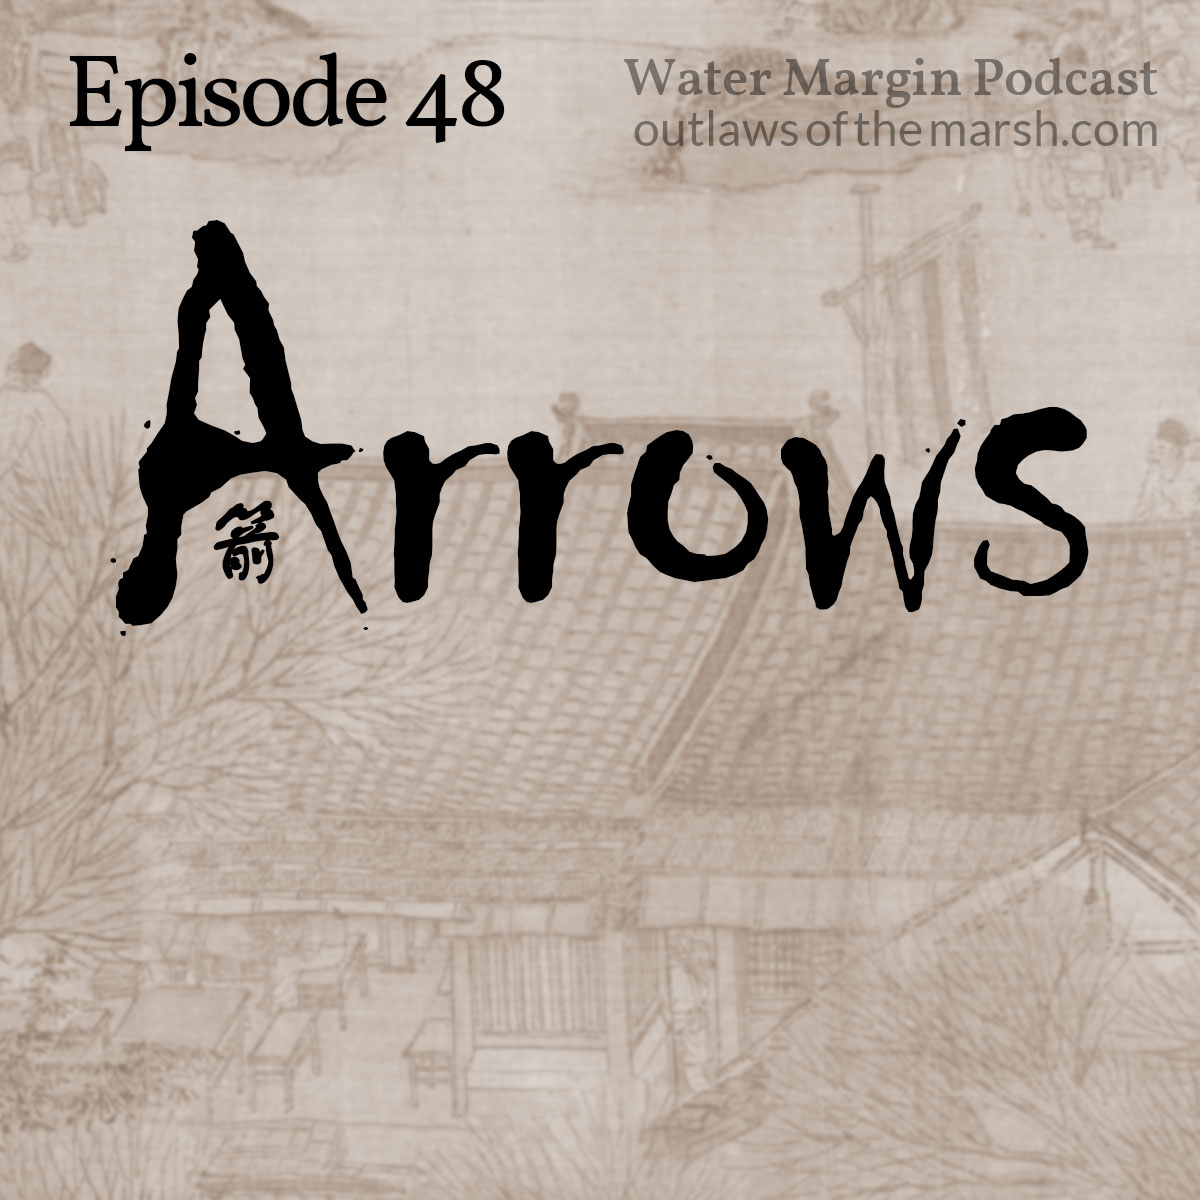 Water Margin Podcast: Episode 048